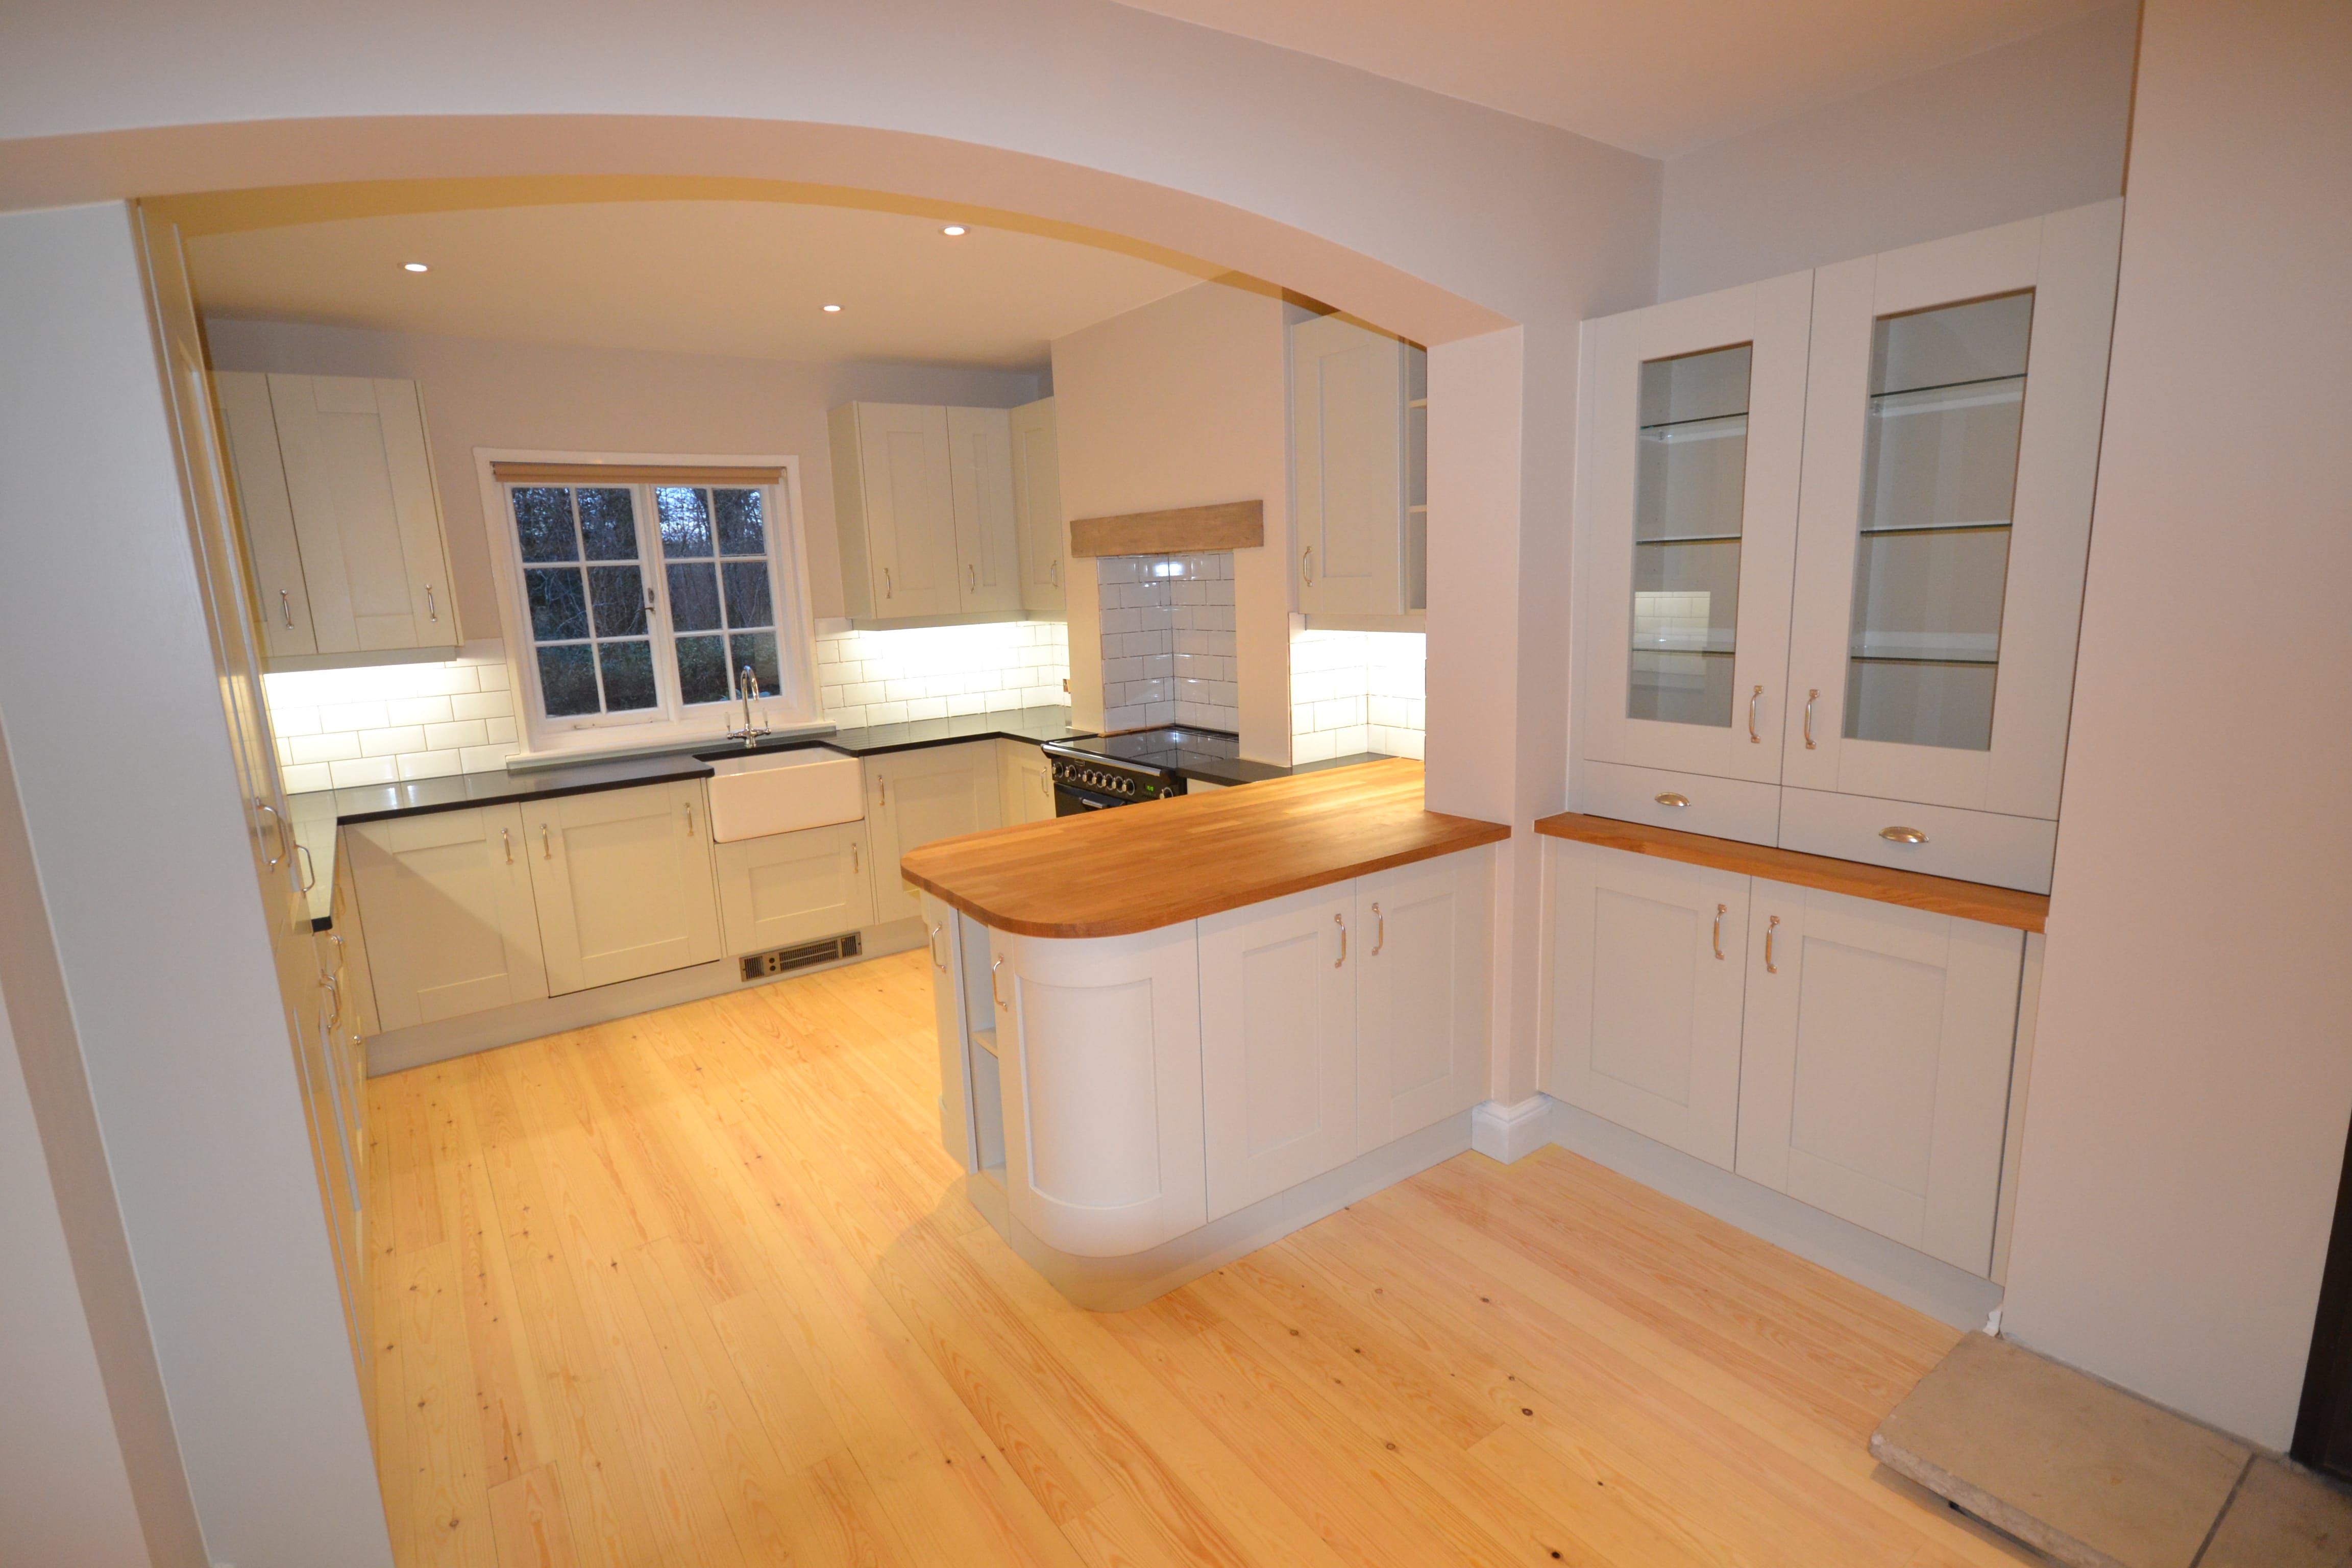 fitted kitchen design pdf